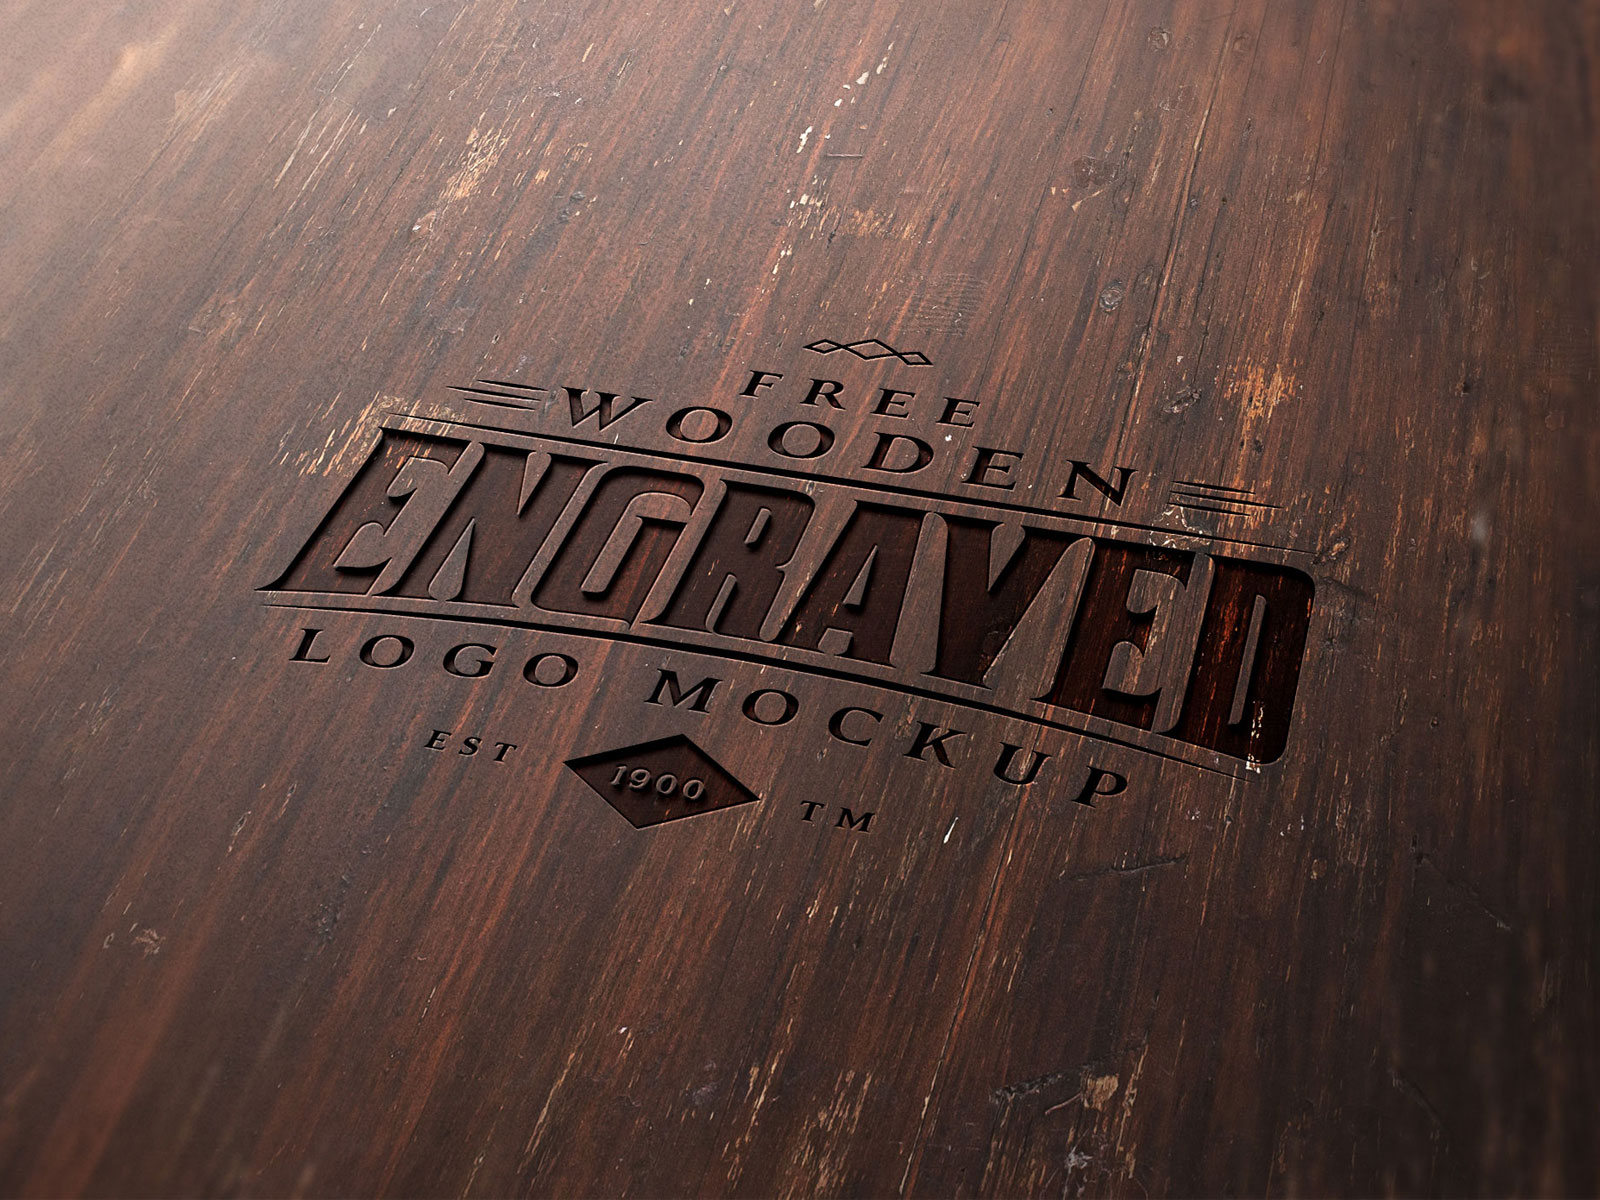 Free-Wood-Engraved-Logo-Mockup-PSD